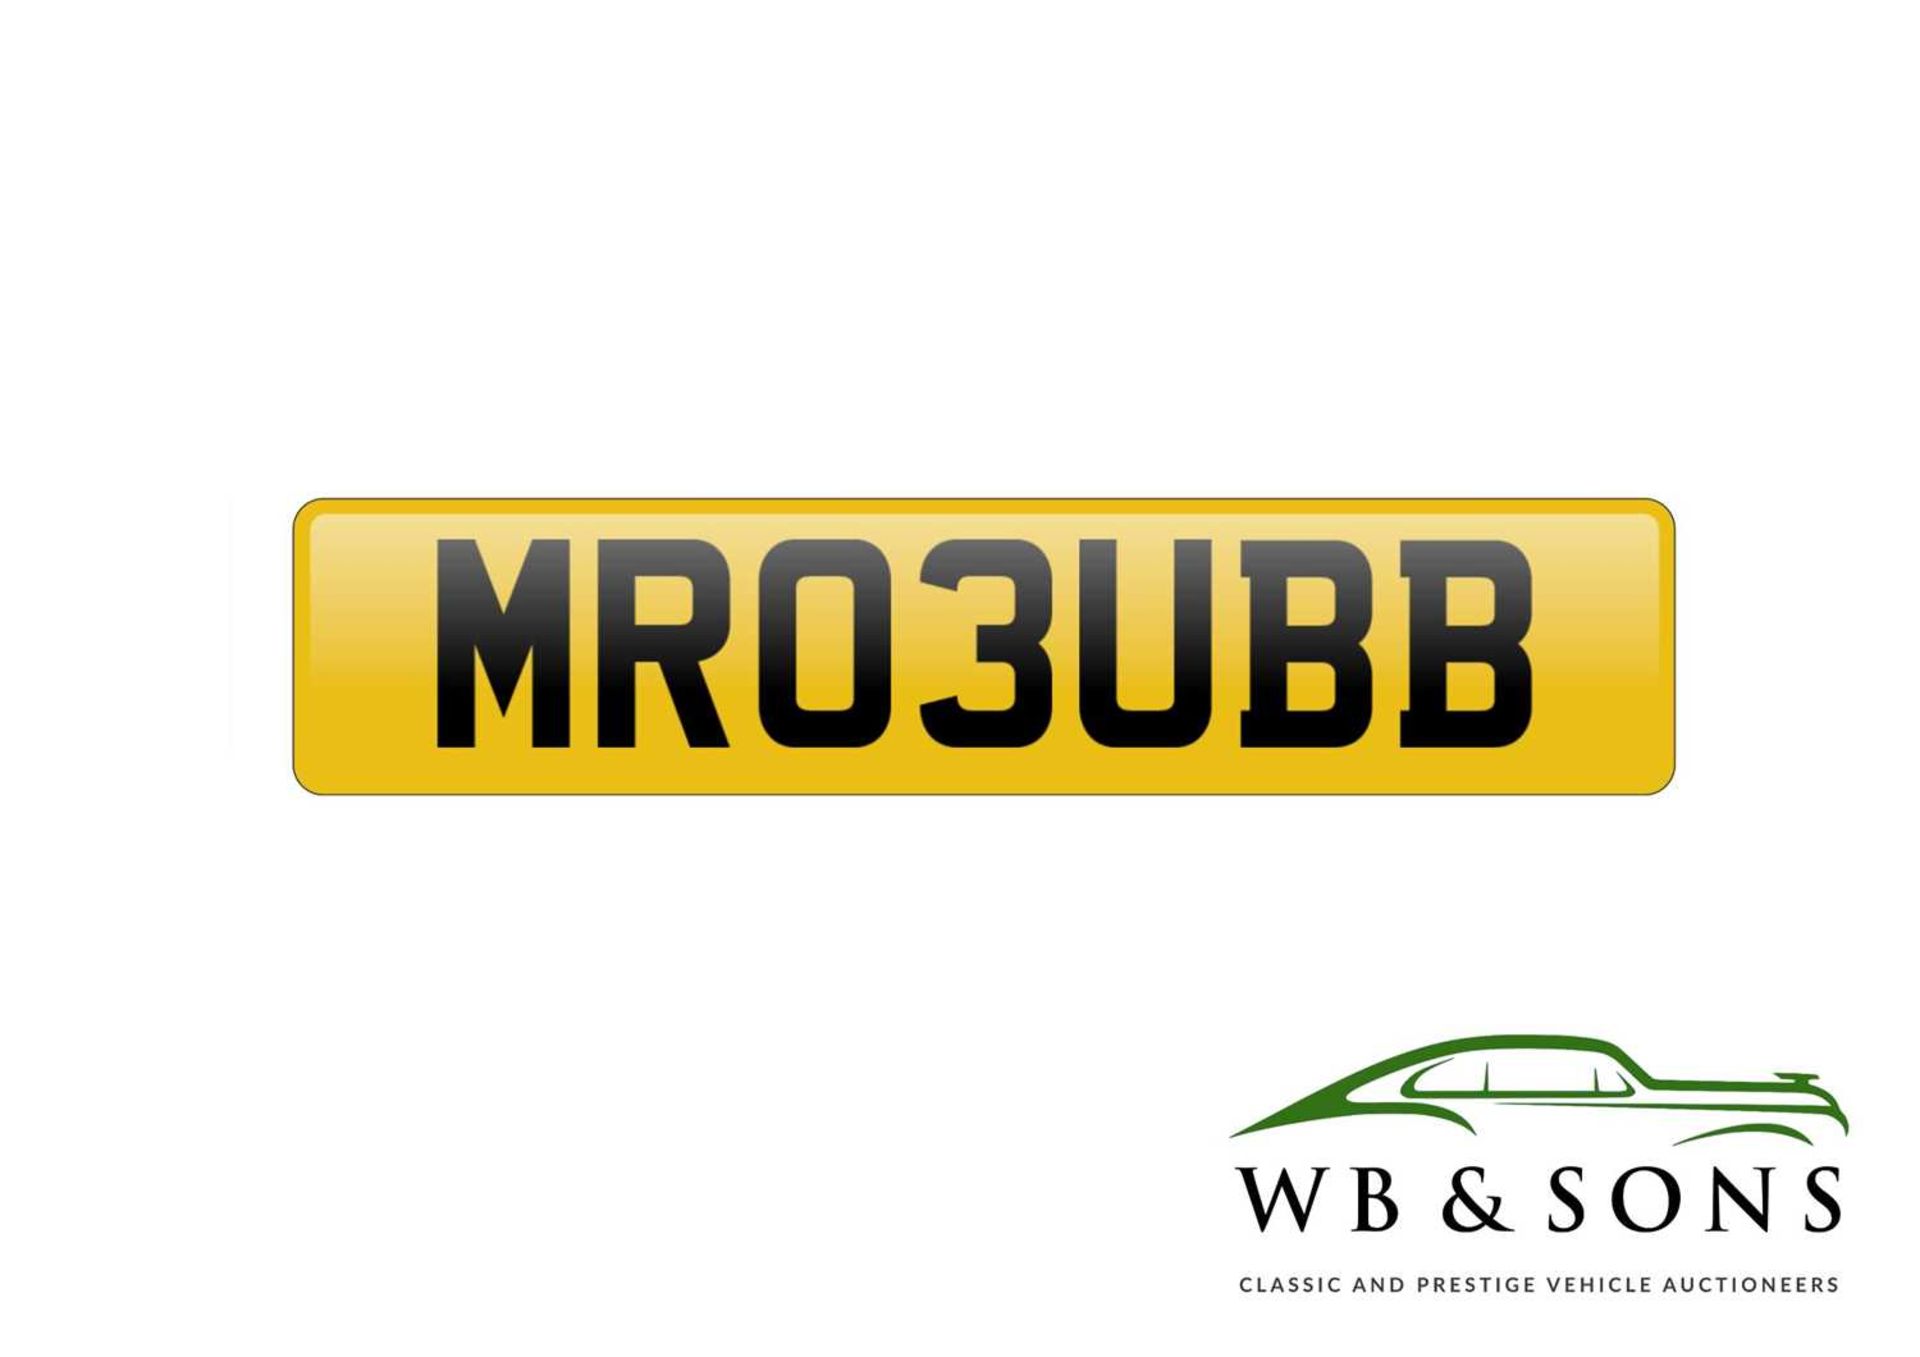 REGISTRATION -MR03 UBB